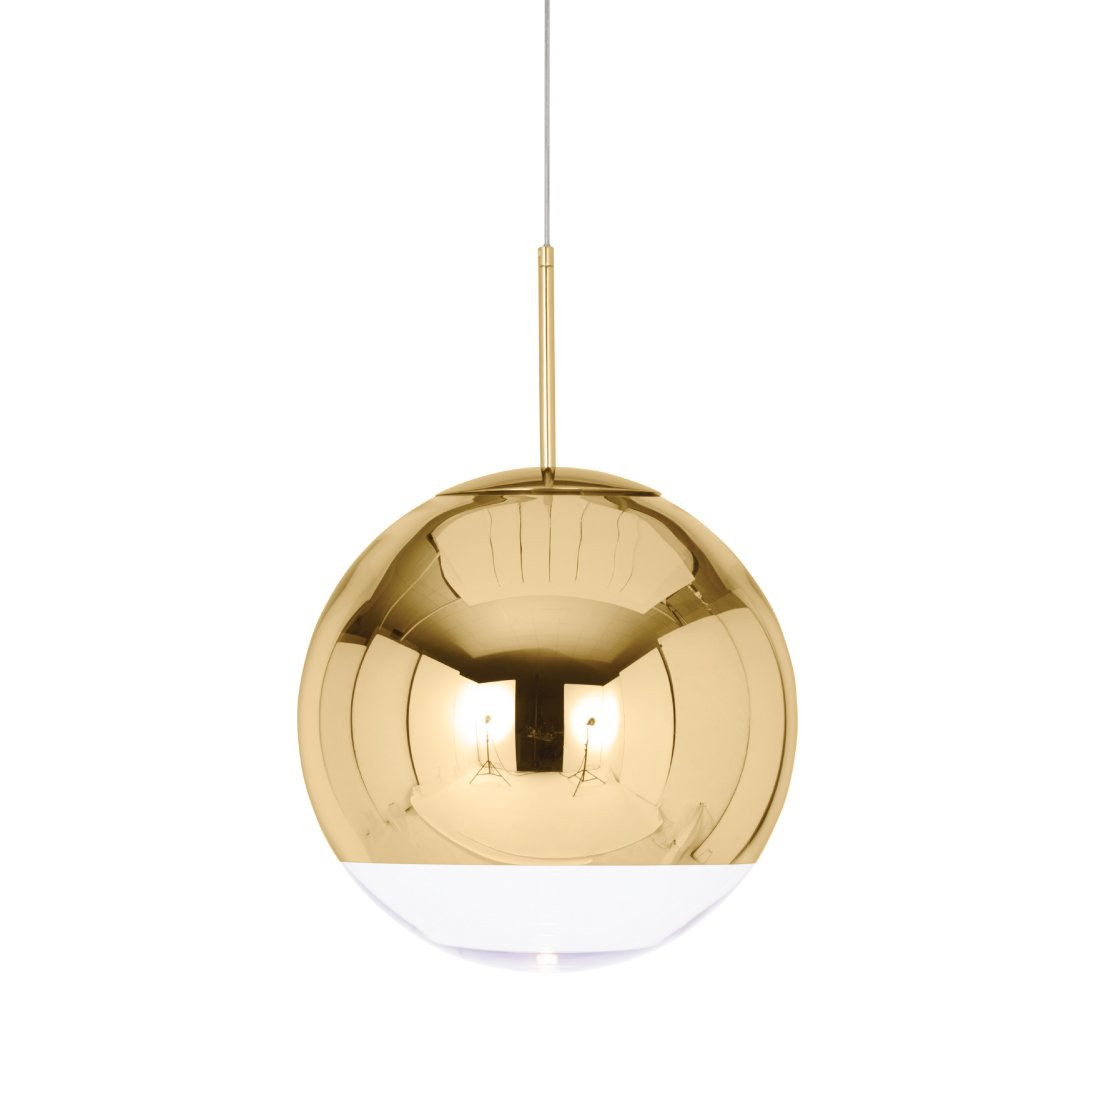 Tom Dixon Mirror Ball Hanglamp Goud Ø 40 cm